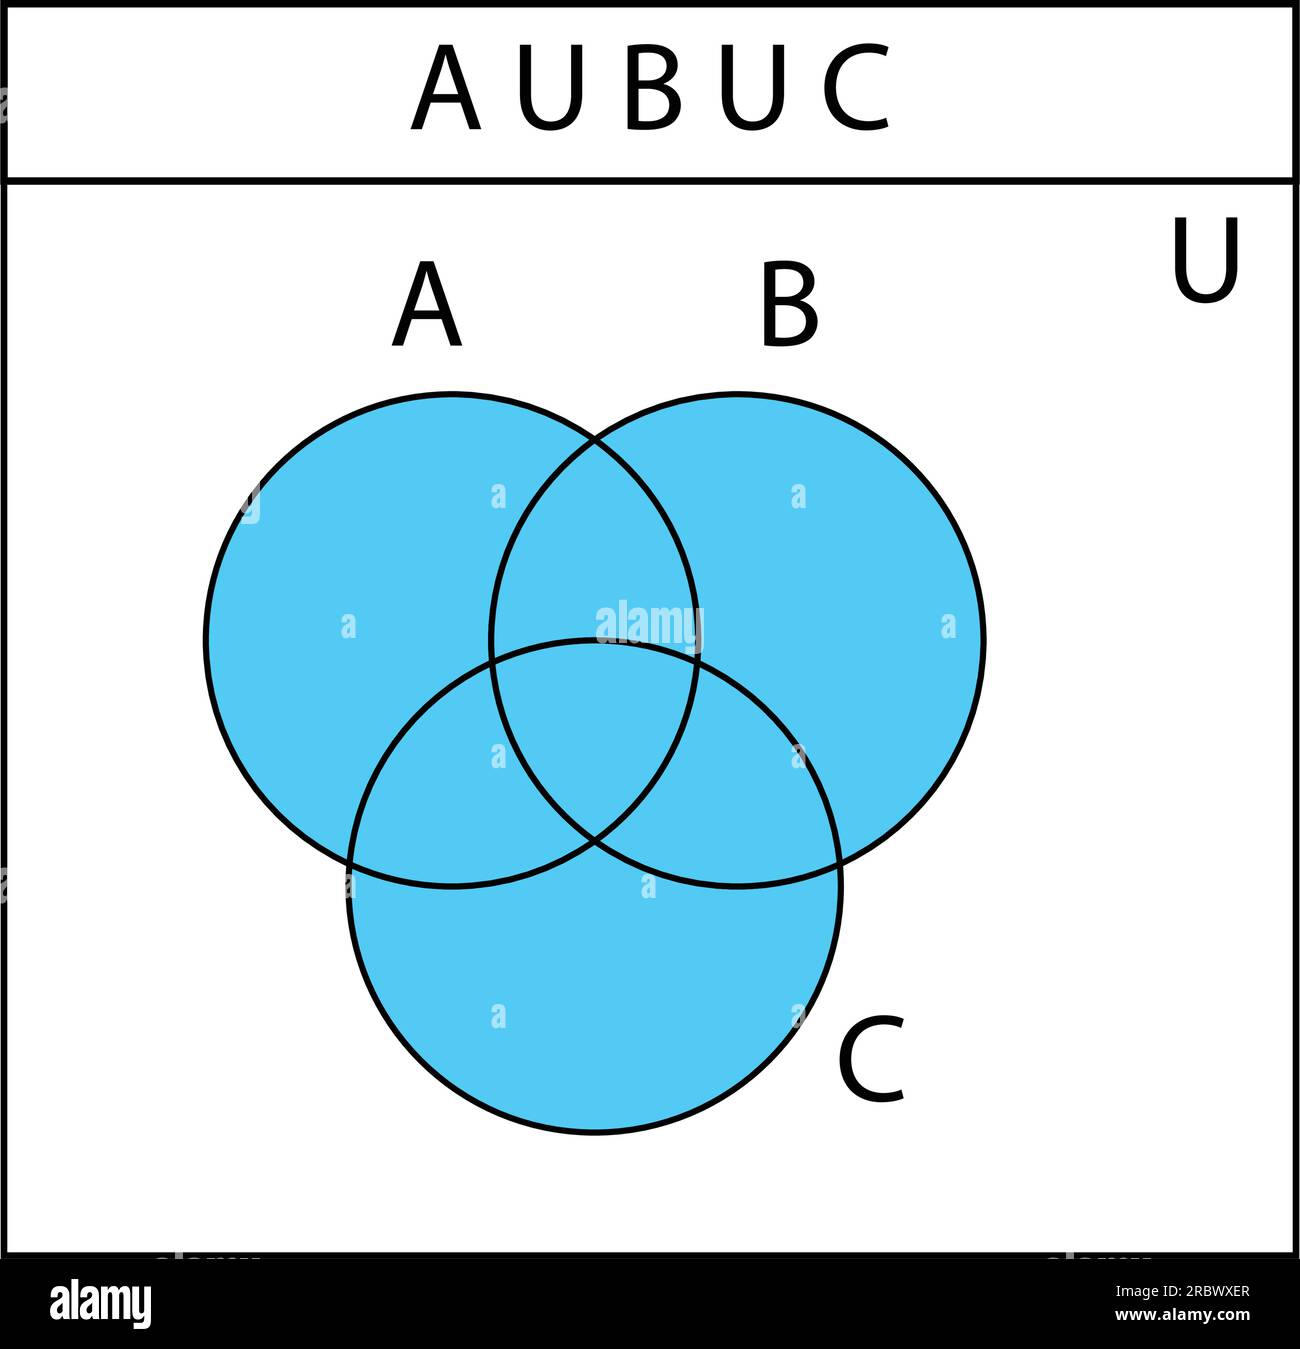 4-Set Venn diagram - Template  Venn diagrams - Vector stencils